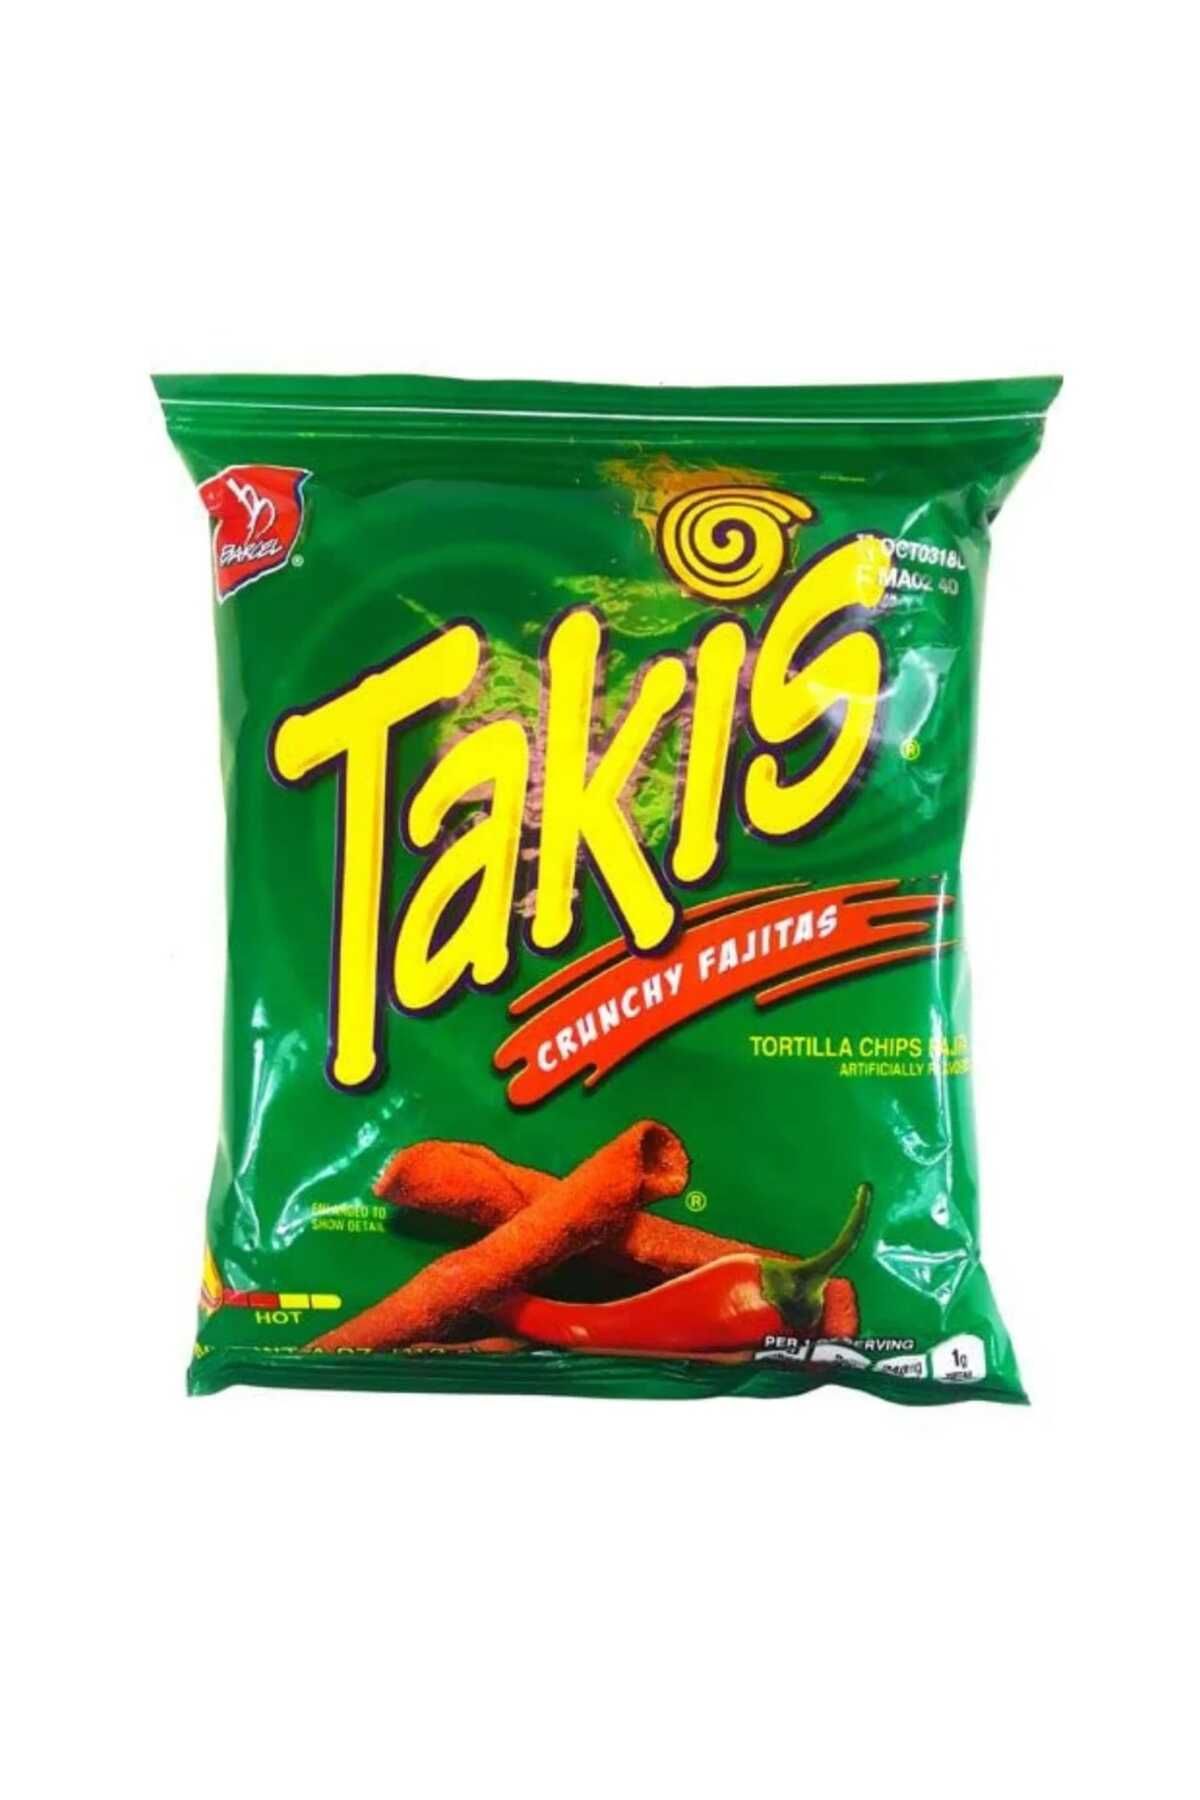 Takis Crunchy Fajitas Flavored Tortilla Chips 113.4gr